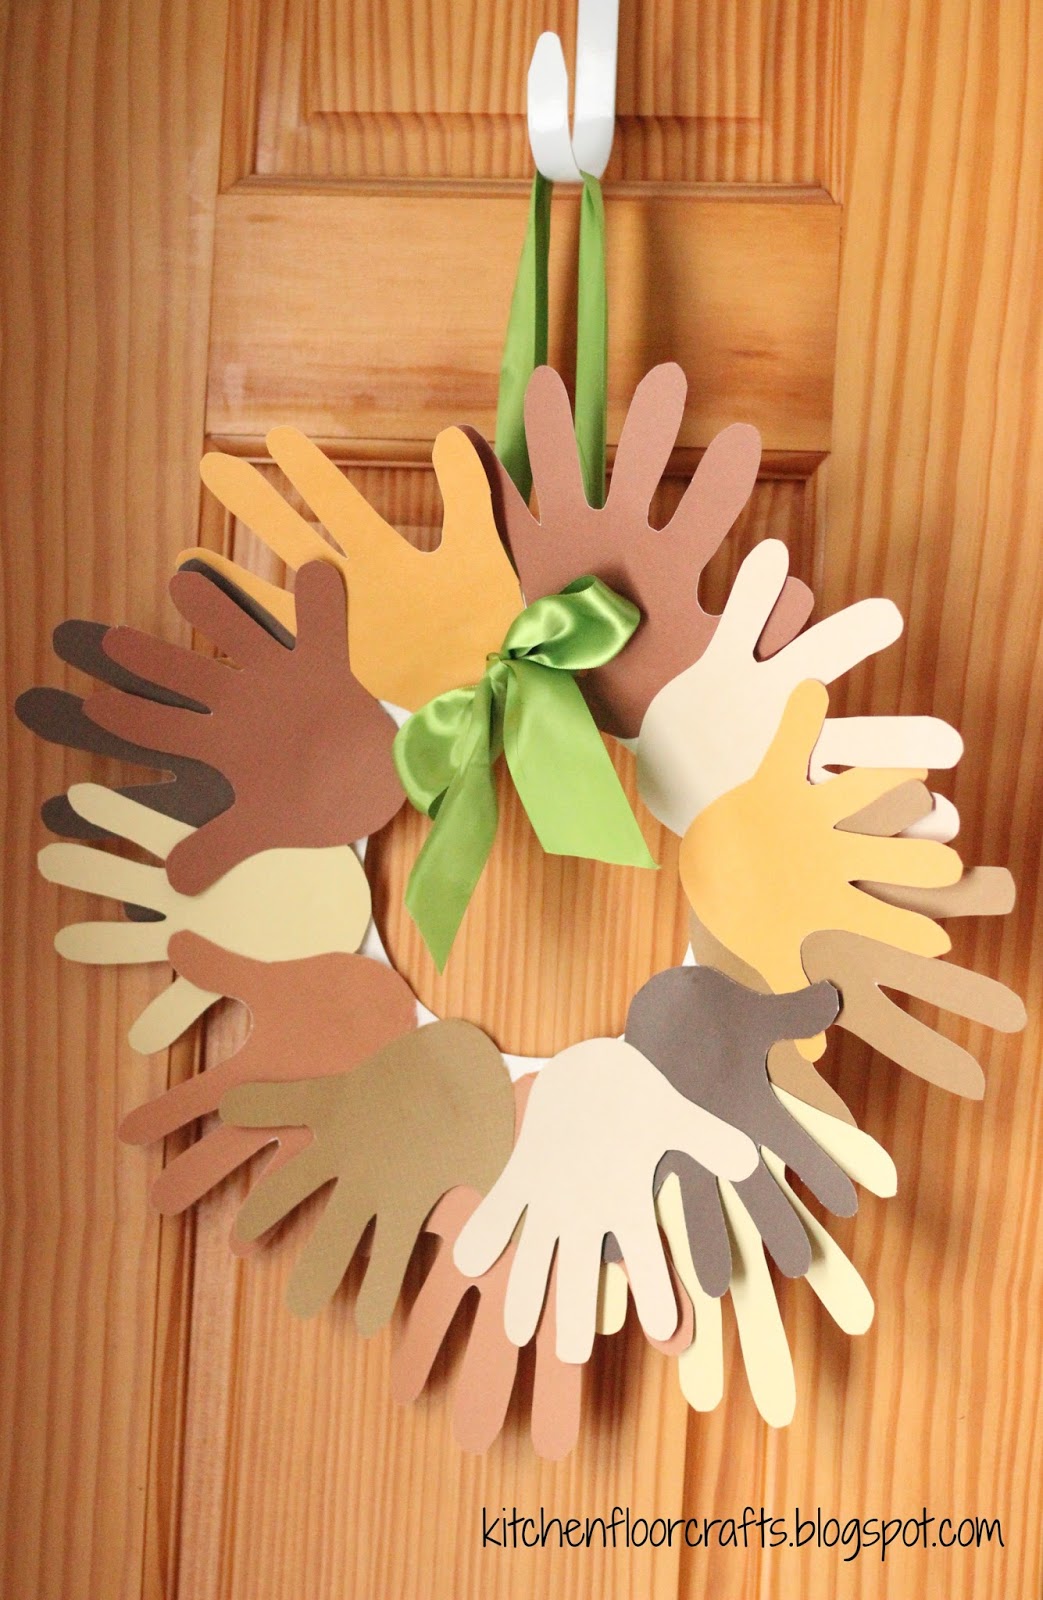 Kitchen Floor Crafts: Shades of People Handprint Wreath